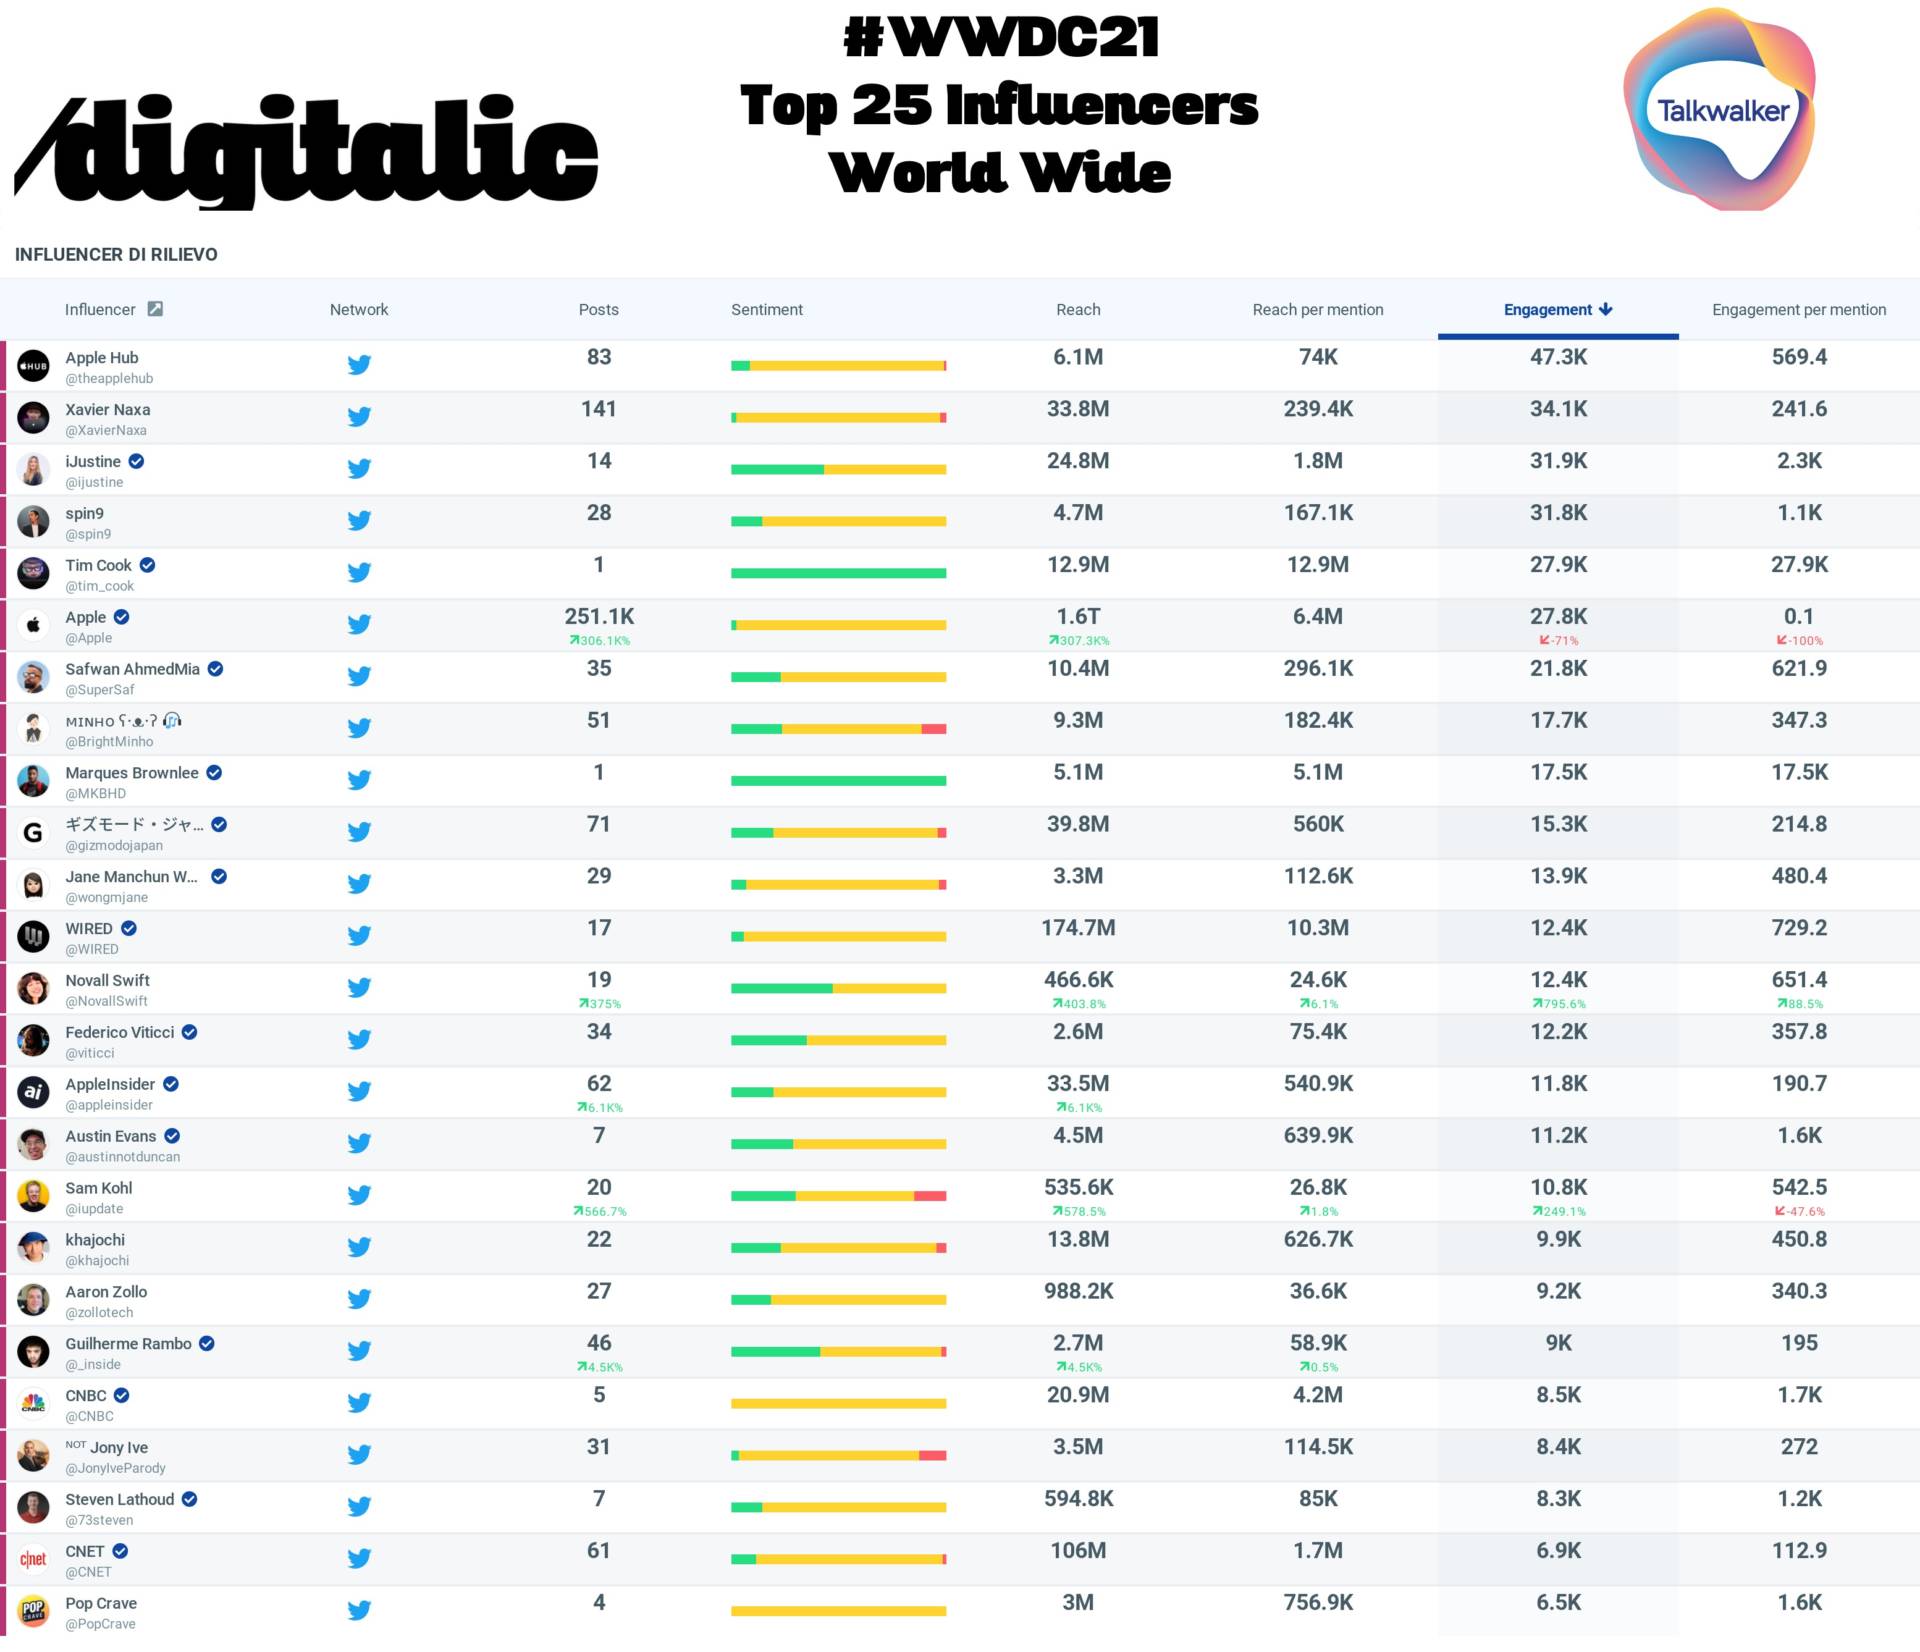 WWDC21 top 25 influencers WorldWide